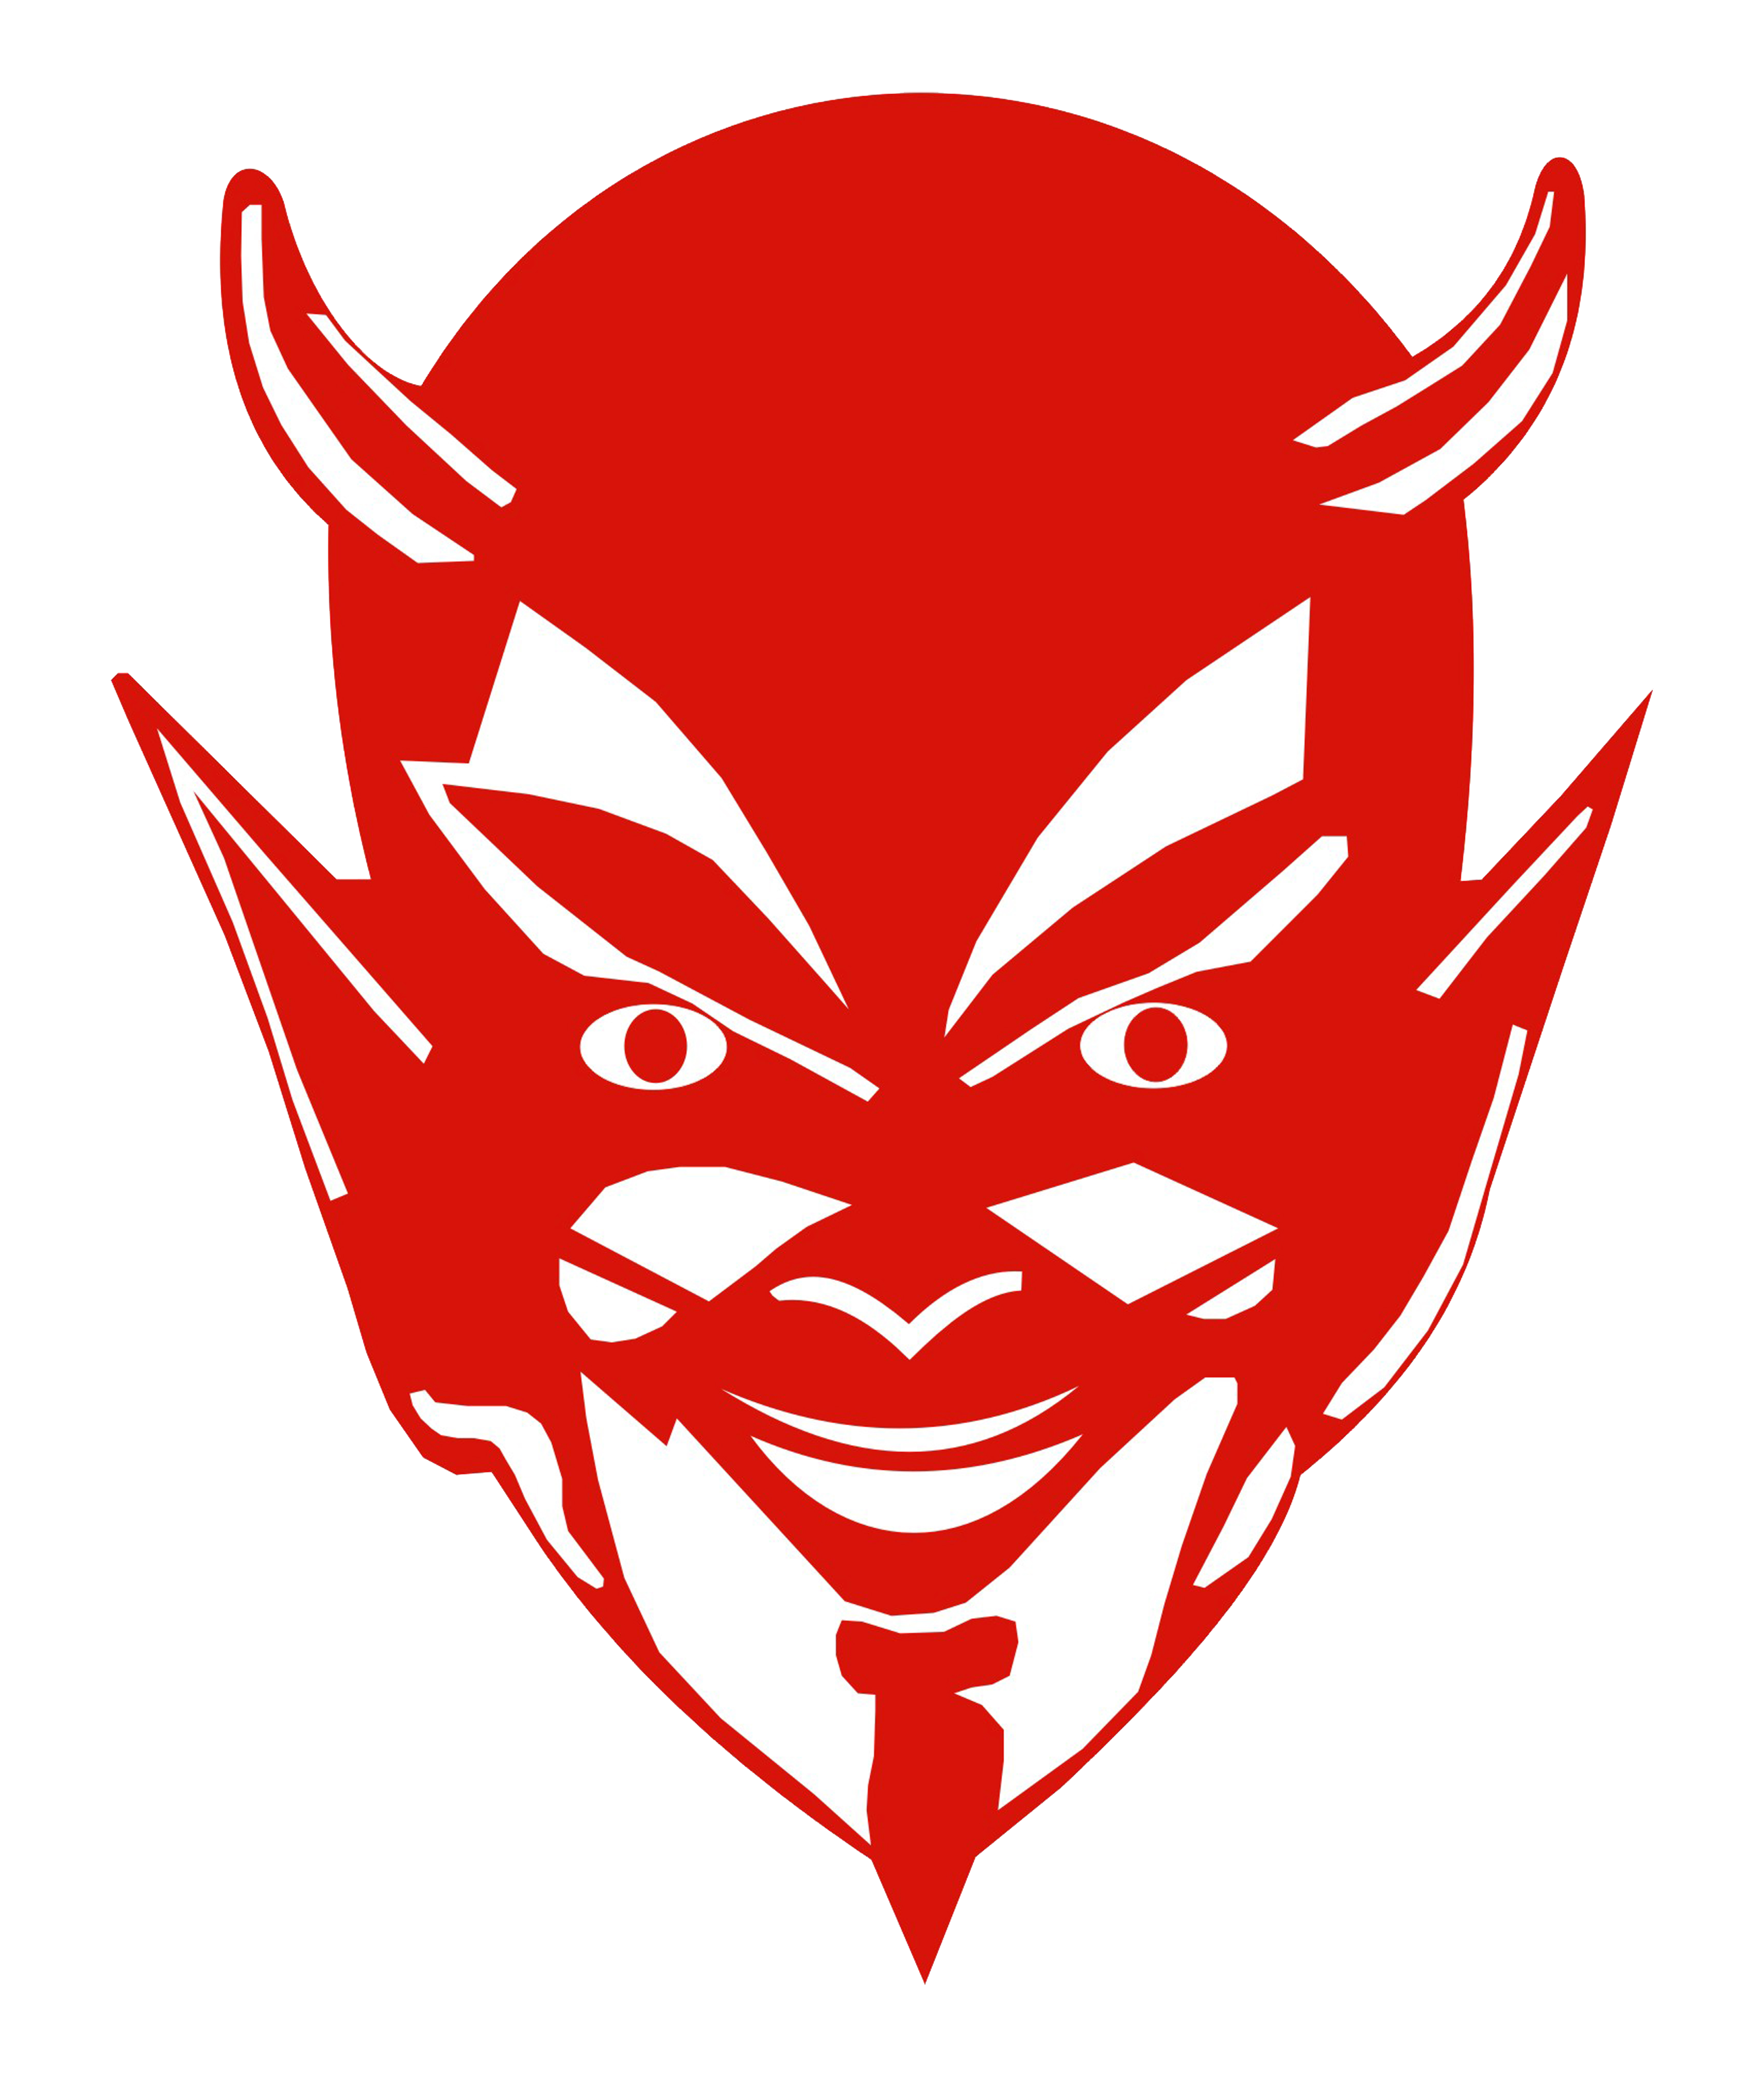 Pic del diablo rojo PNG